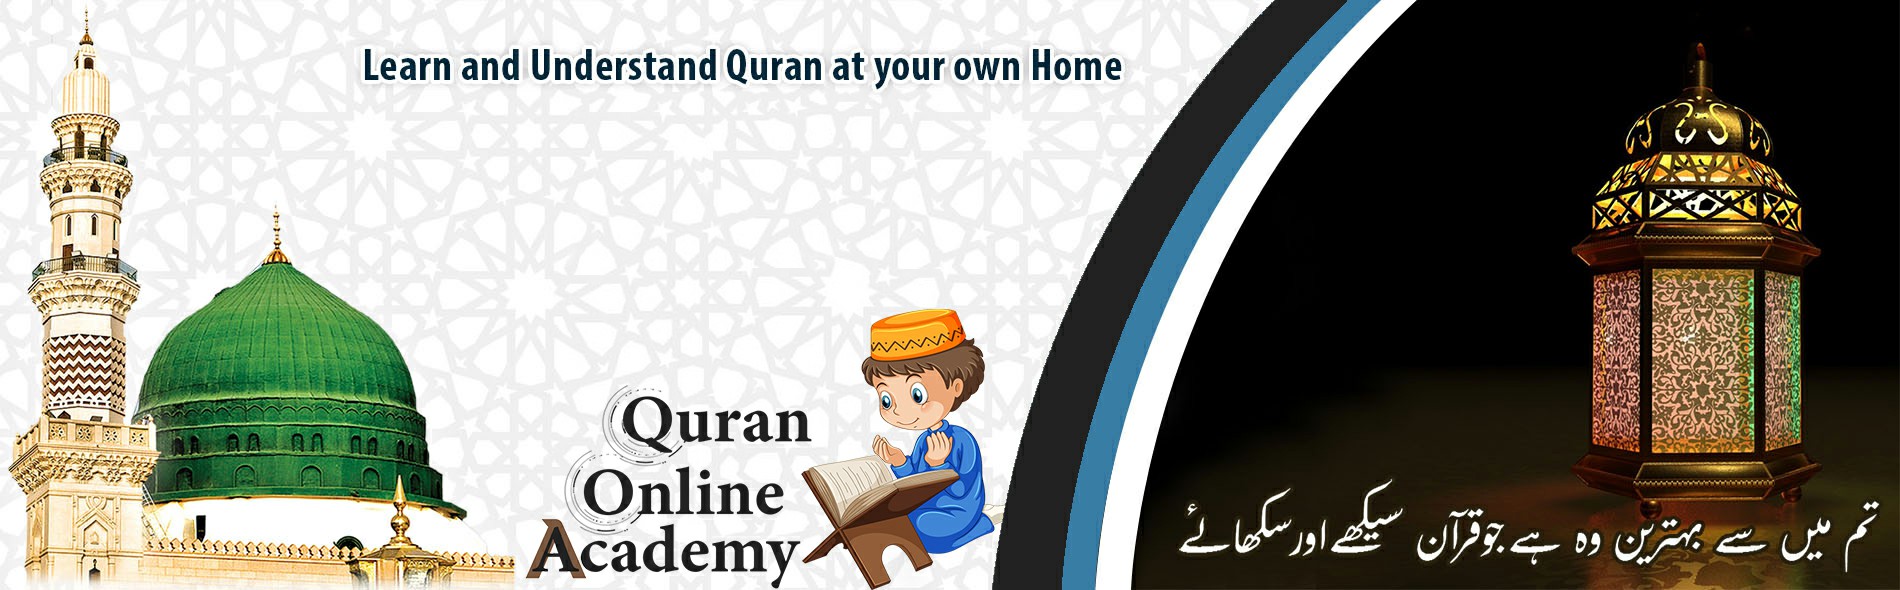 Online Quran Teaching Academy UK